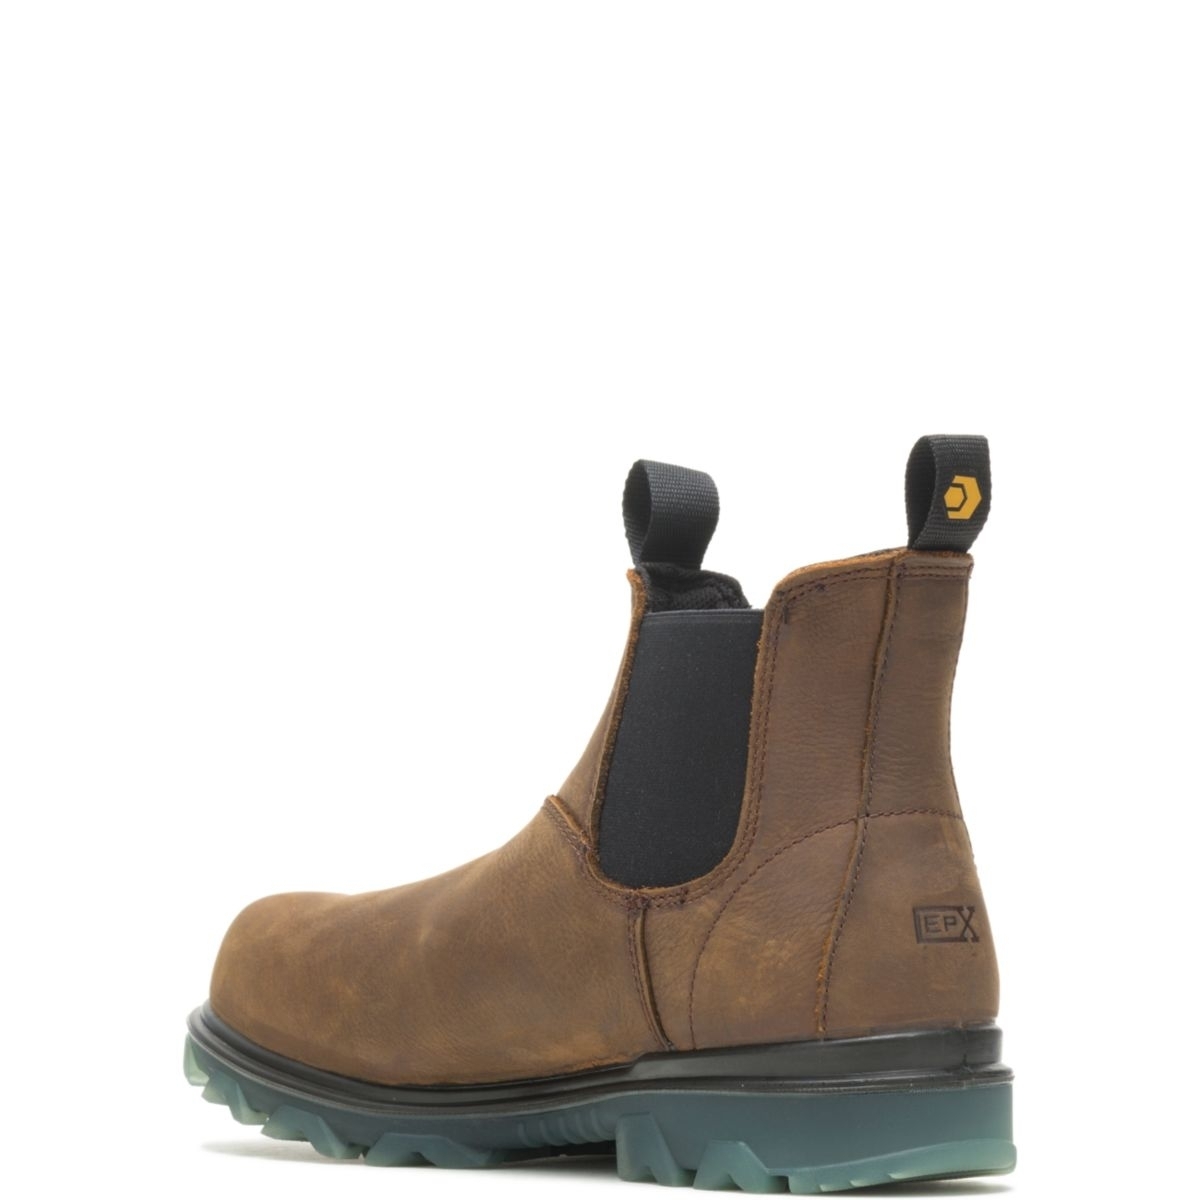 WOLVERINE Men's I-90 EPXÂ® Waterproof Soft Toe Romeo Pull On Work Boot Brown - W10790 - SUDAN BROWN, 7 X-Wide